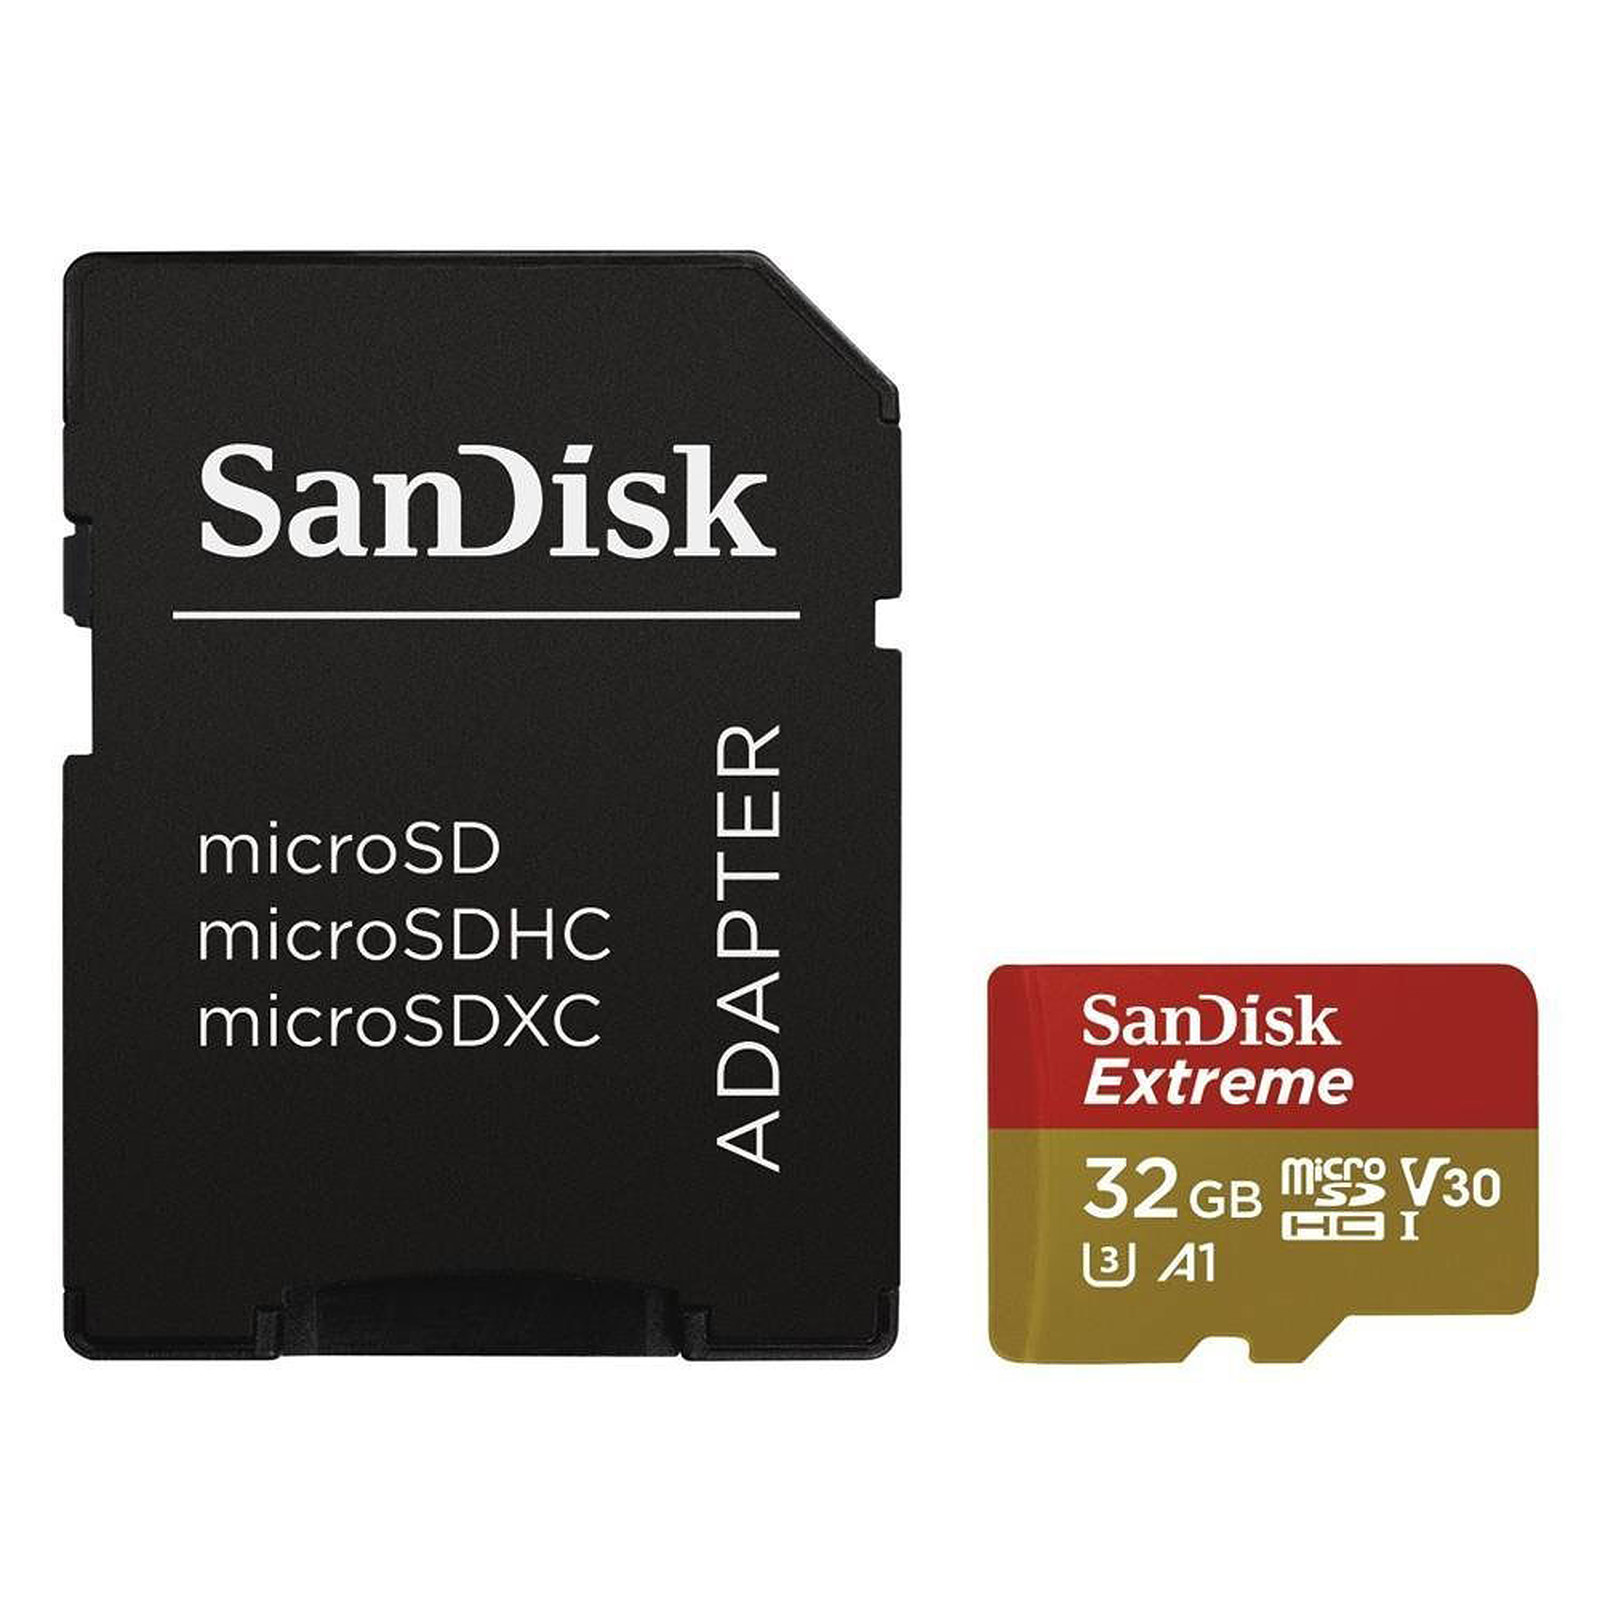 SanDisk Extreme microSDHC UHS-I U3 V30 32 Go + Adaptateur SD - Carte memoire Sandisk